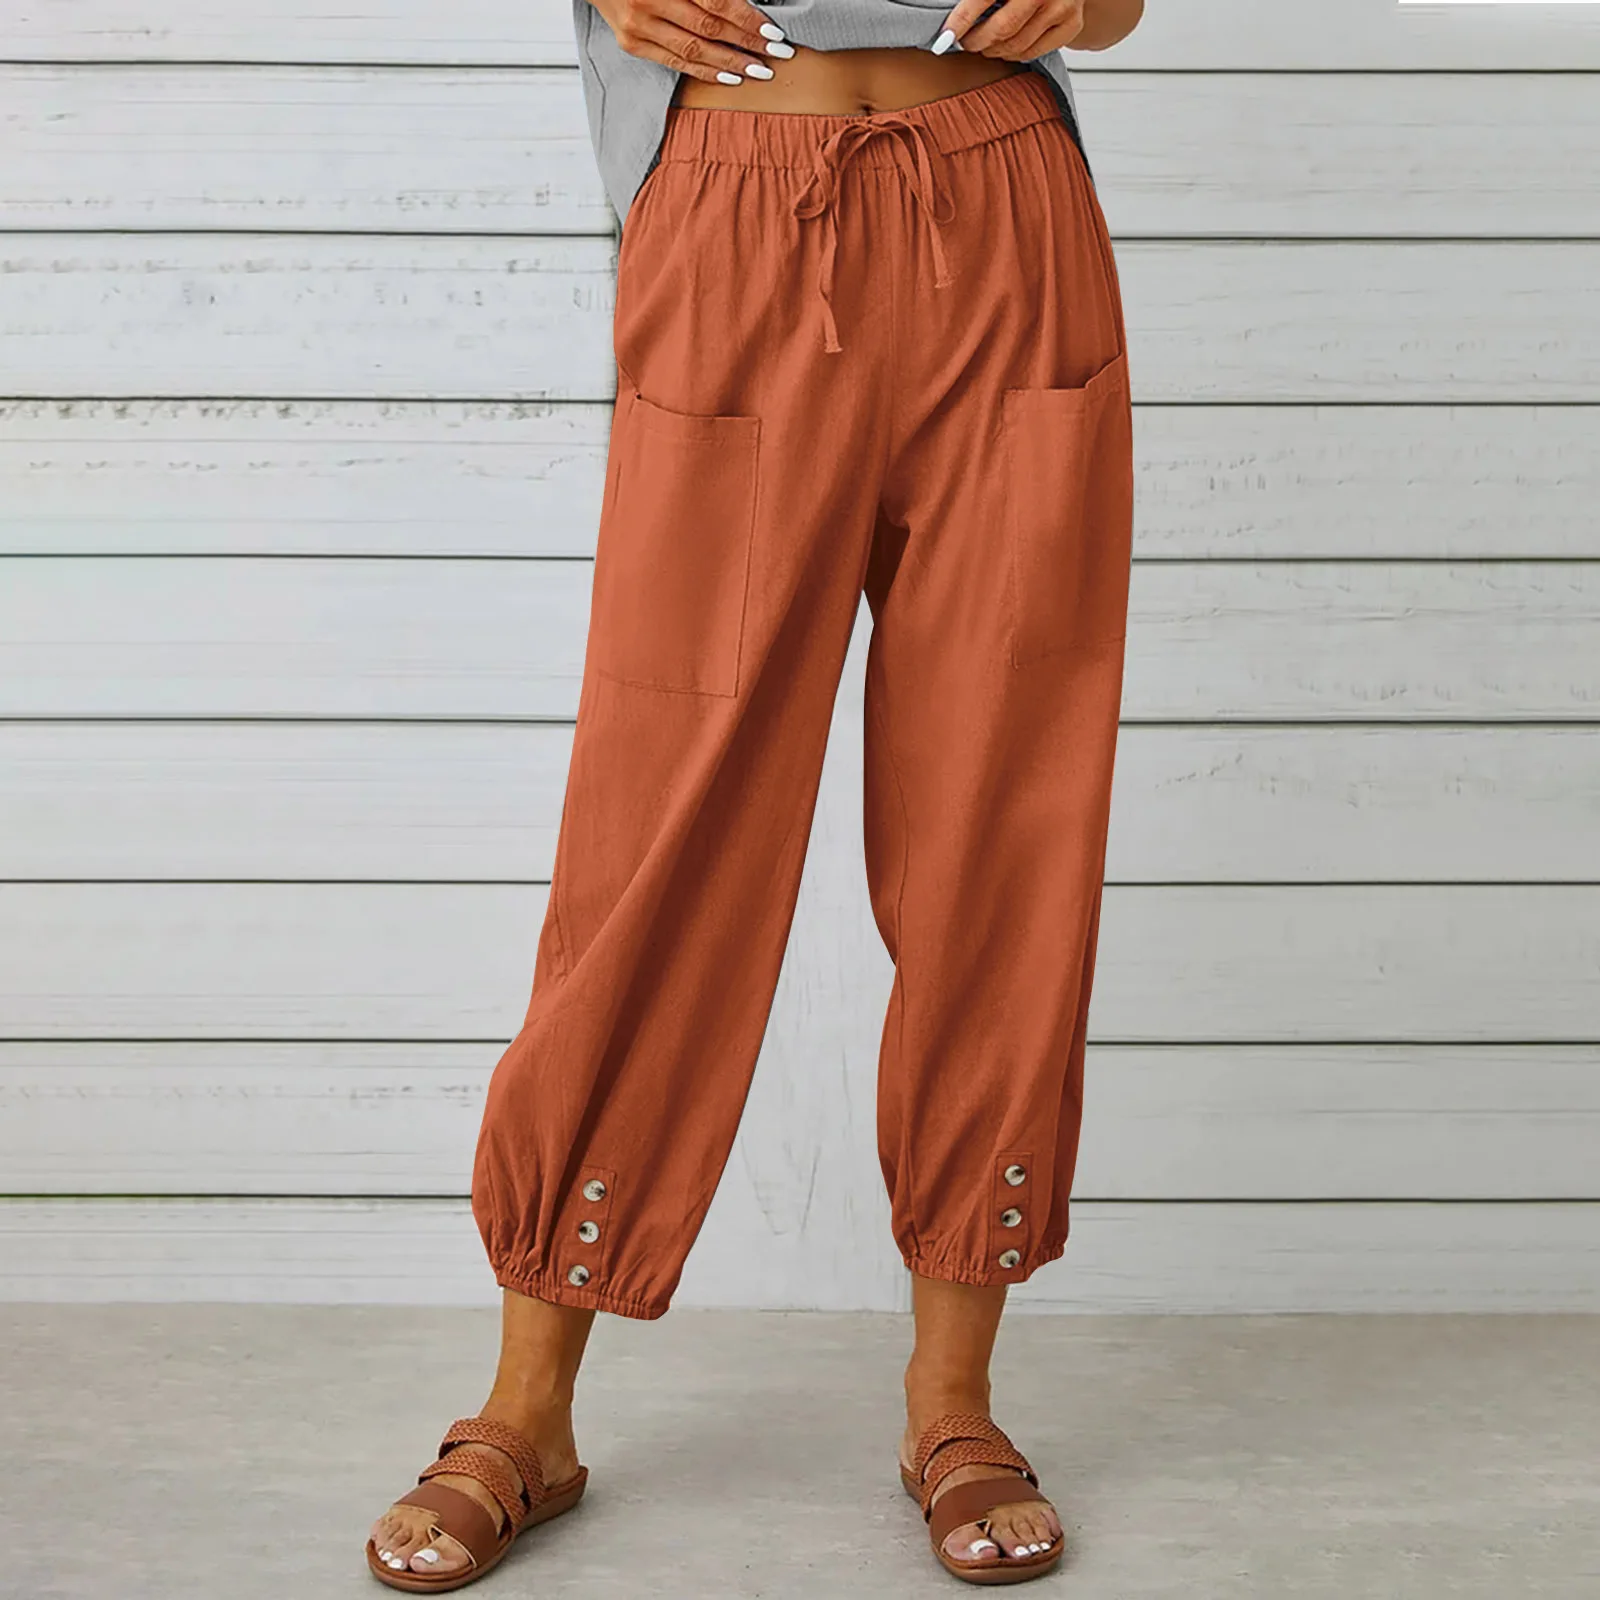 Women Casual Cotton Linen Pants Ladies Elastic Waist Solid Pockets Long Trousers Loose Women's Harem Pants Spring Streetwear